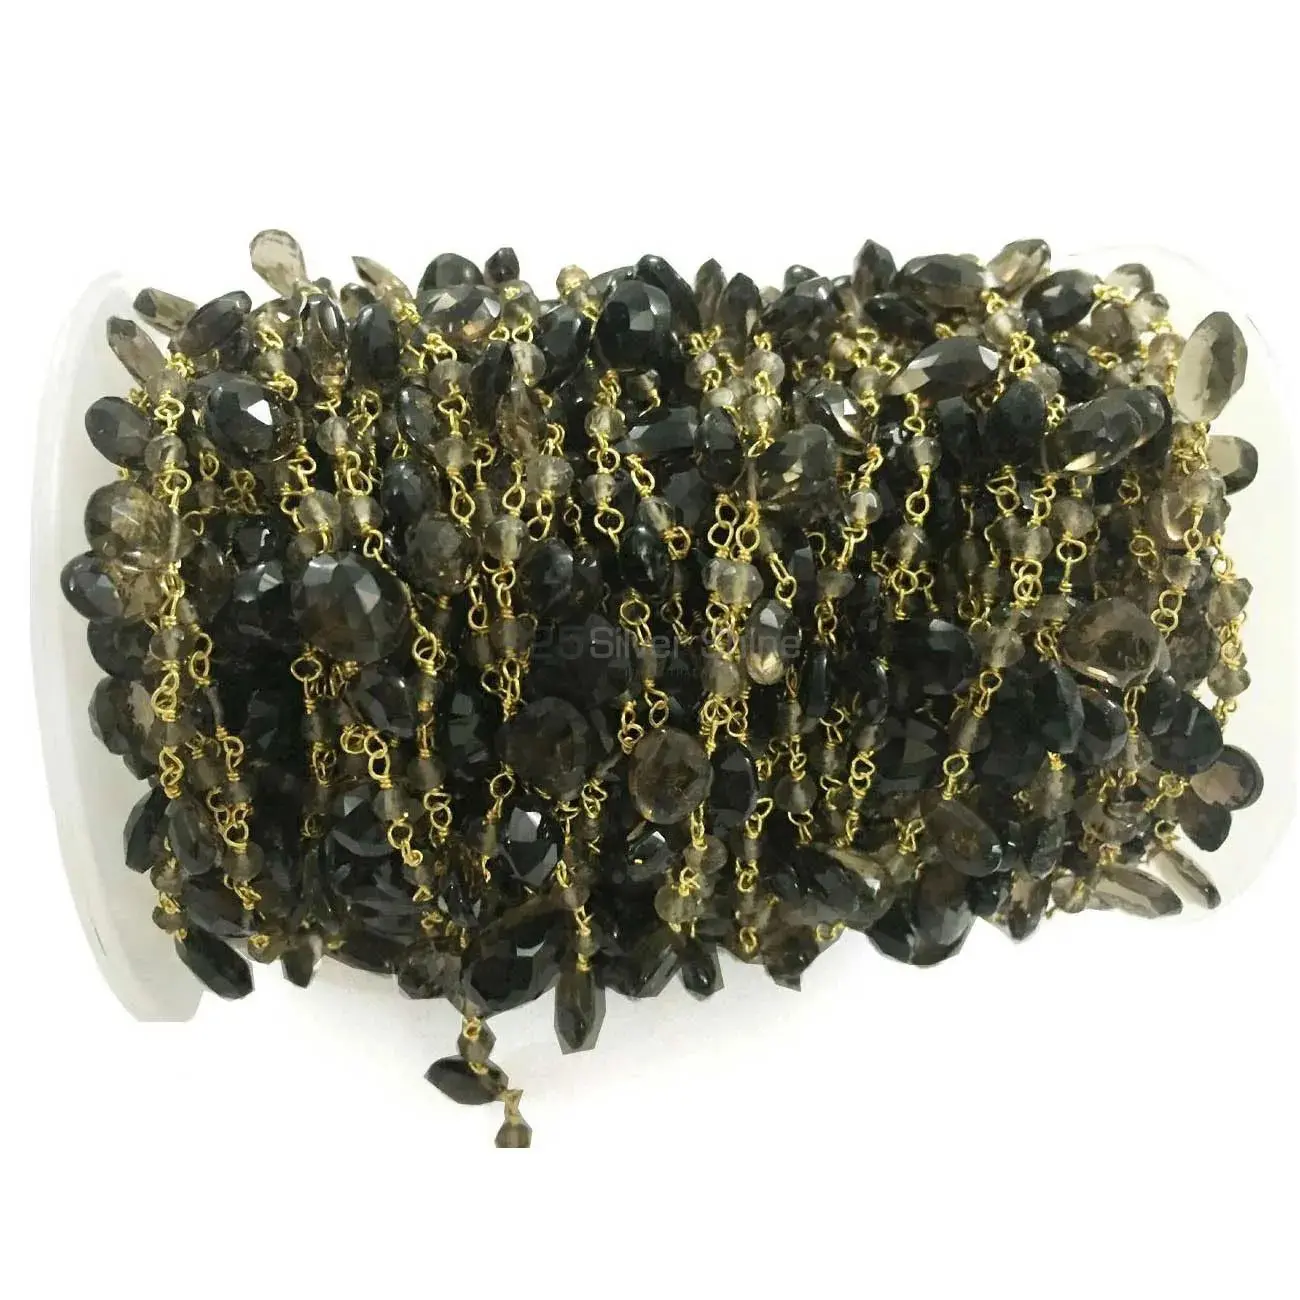 Smoky Quartz Gemstone Rosary Chain. "Wire Wrapped 1 Feet Roll Chain" 925RC227